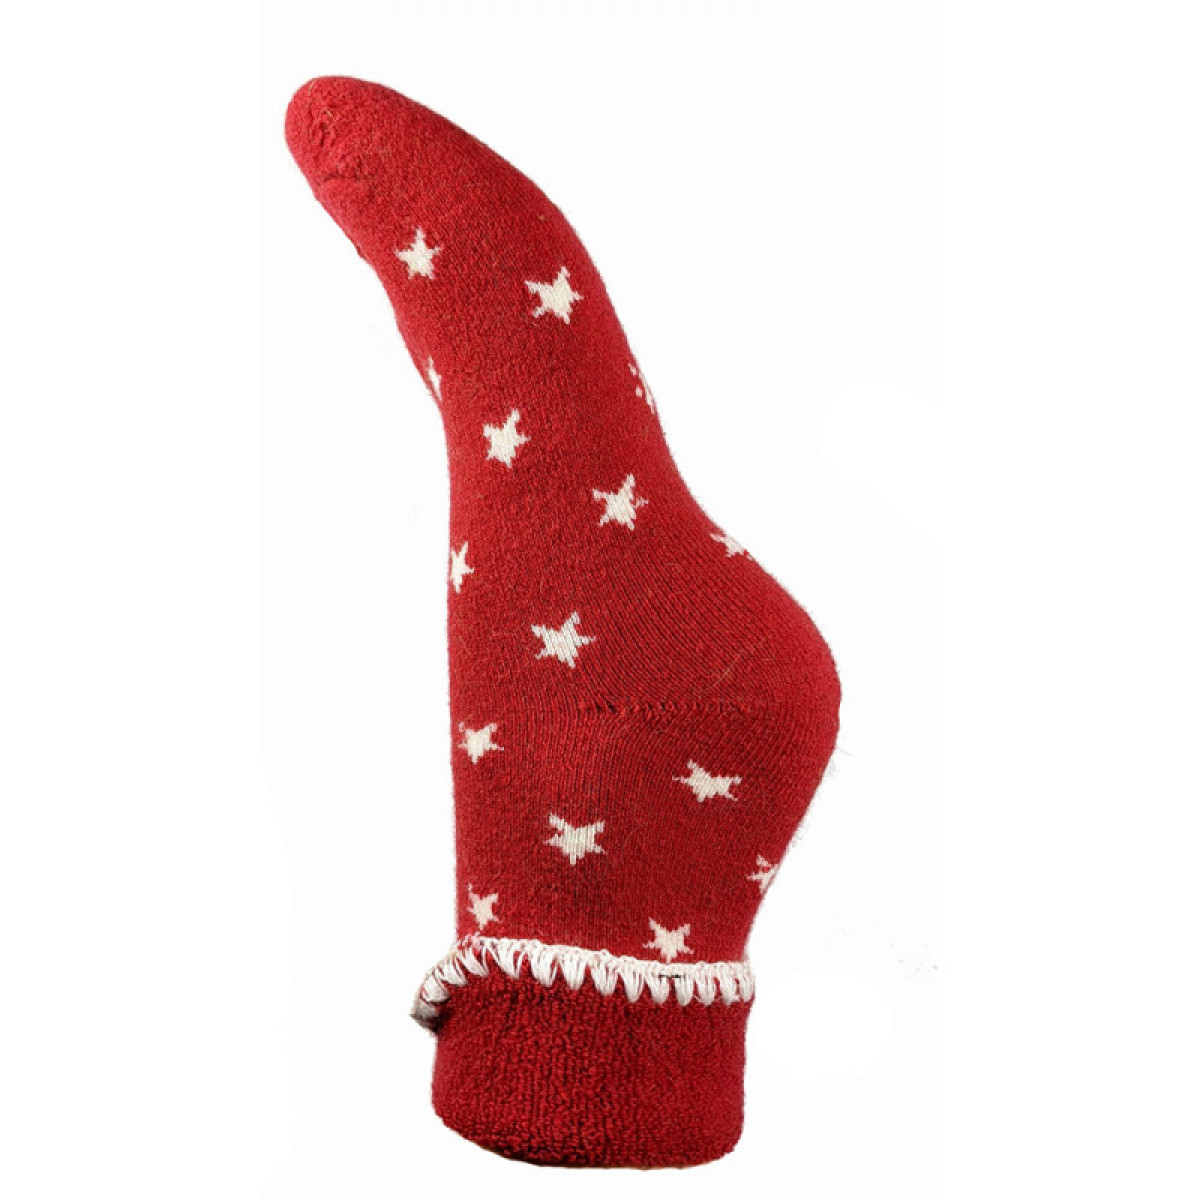 joya-red-with-cream-stars-cuff-socks-1